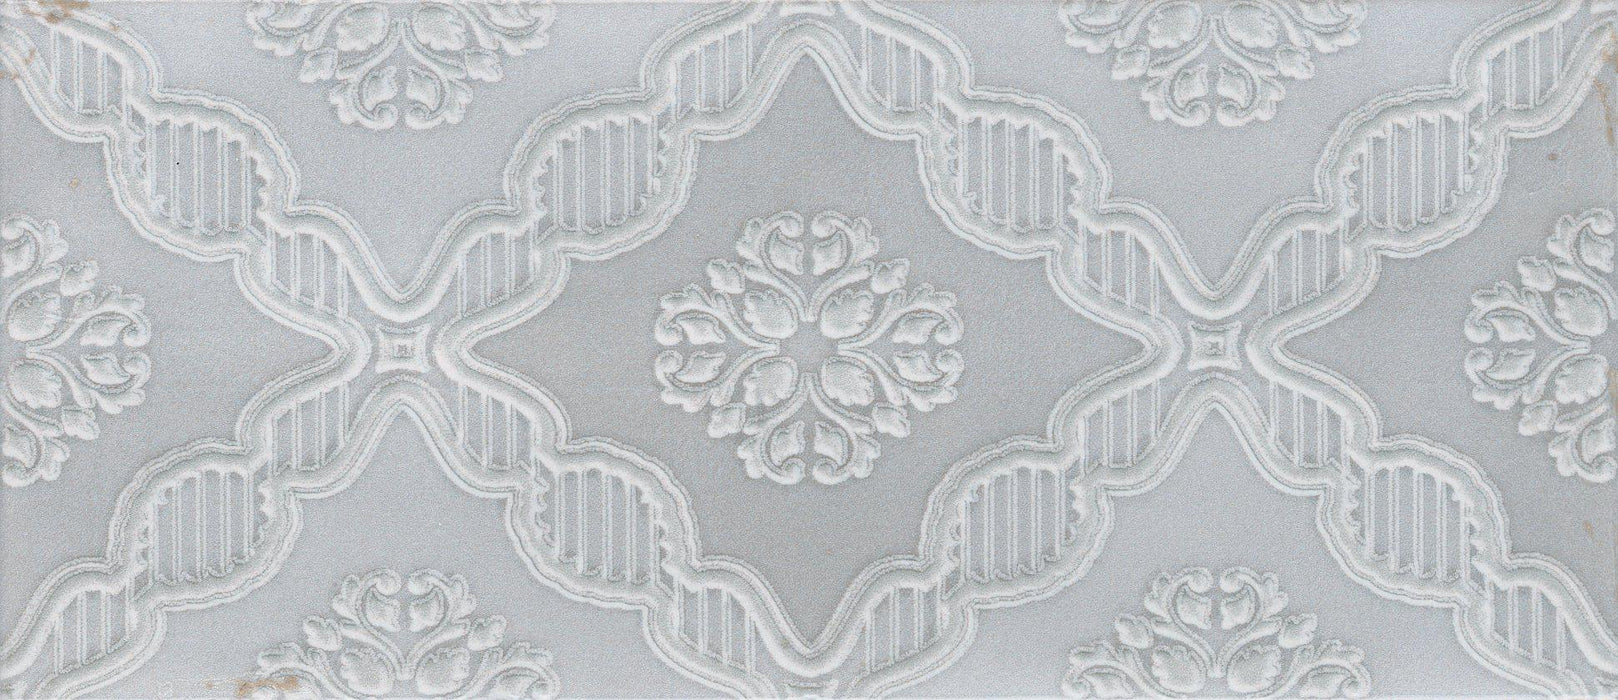 Maiolica Chantilly Macrame Tender Gray Glossy 4x10 Ceramic  Tile